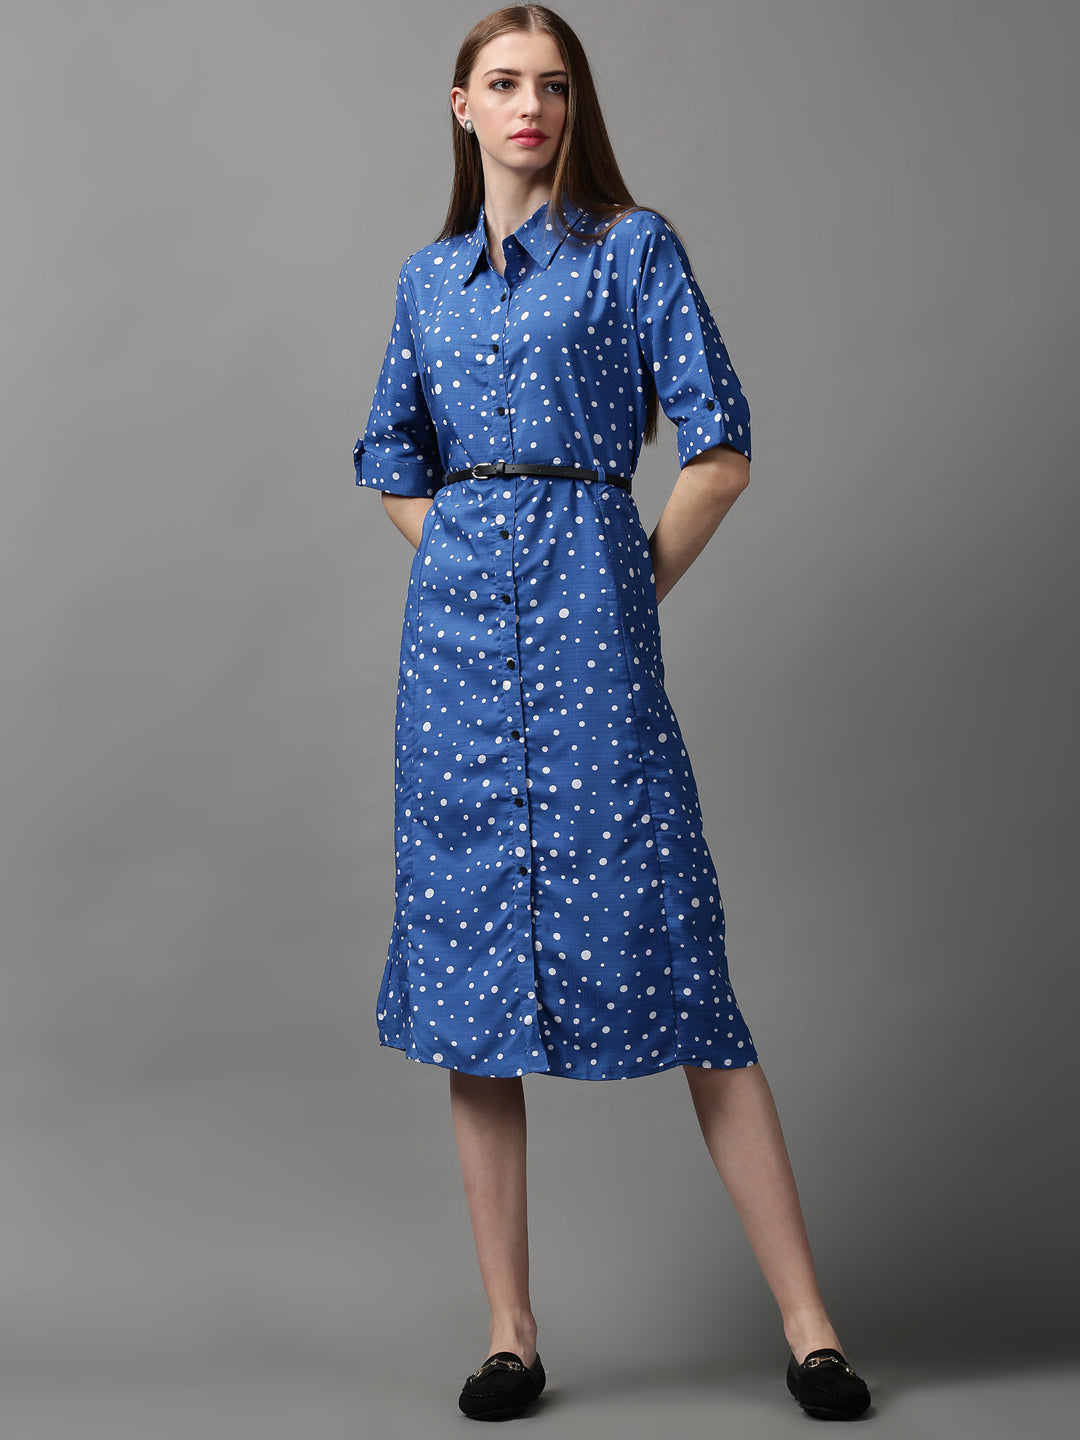 Women's Blue Printed A-Line Dress